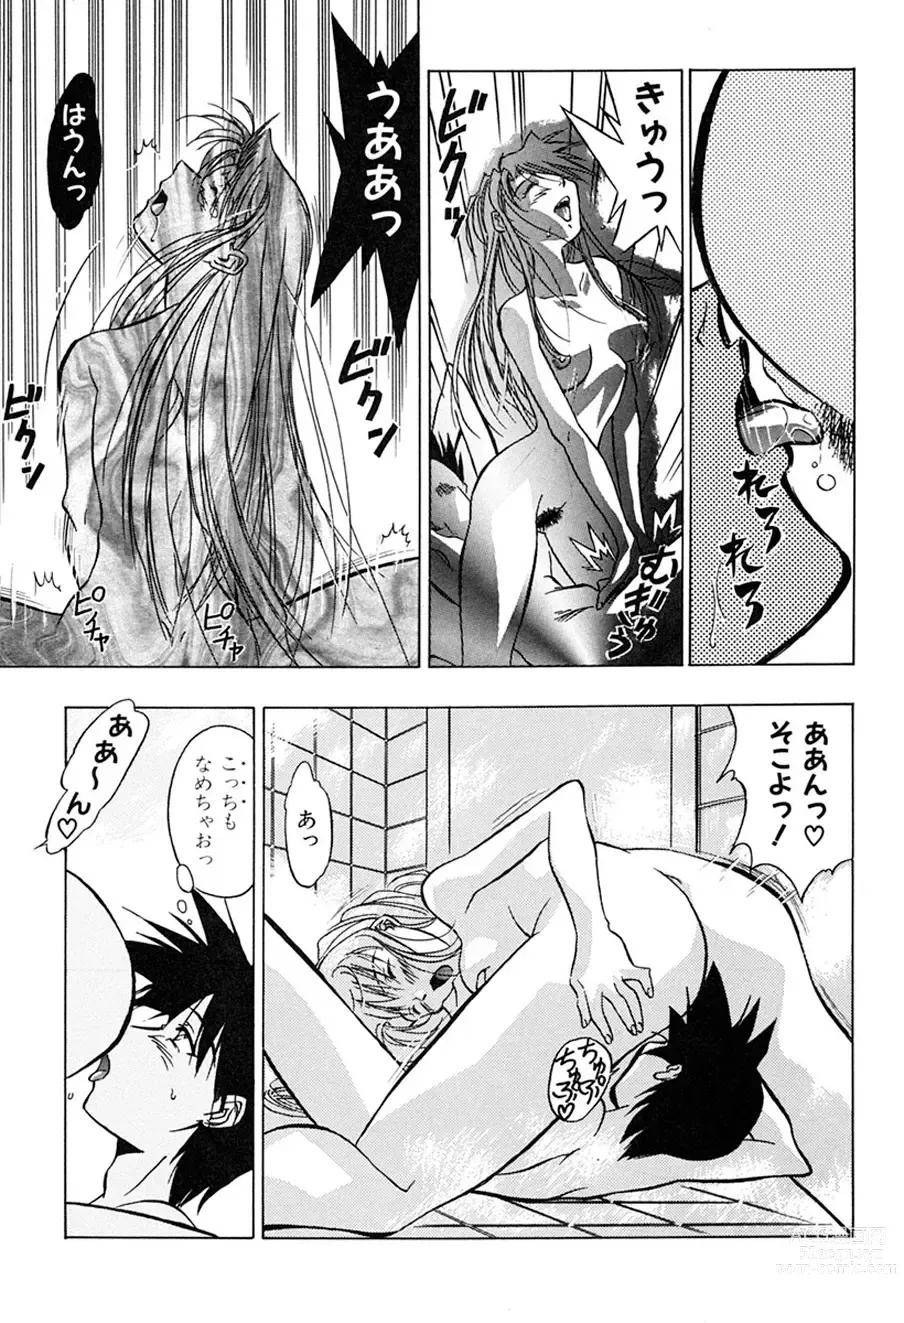 Page 160 of manga Haitoku no Ai